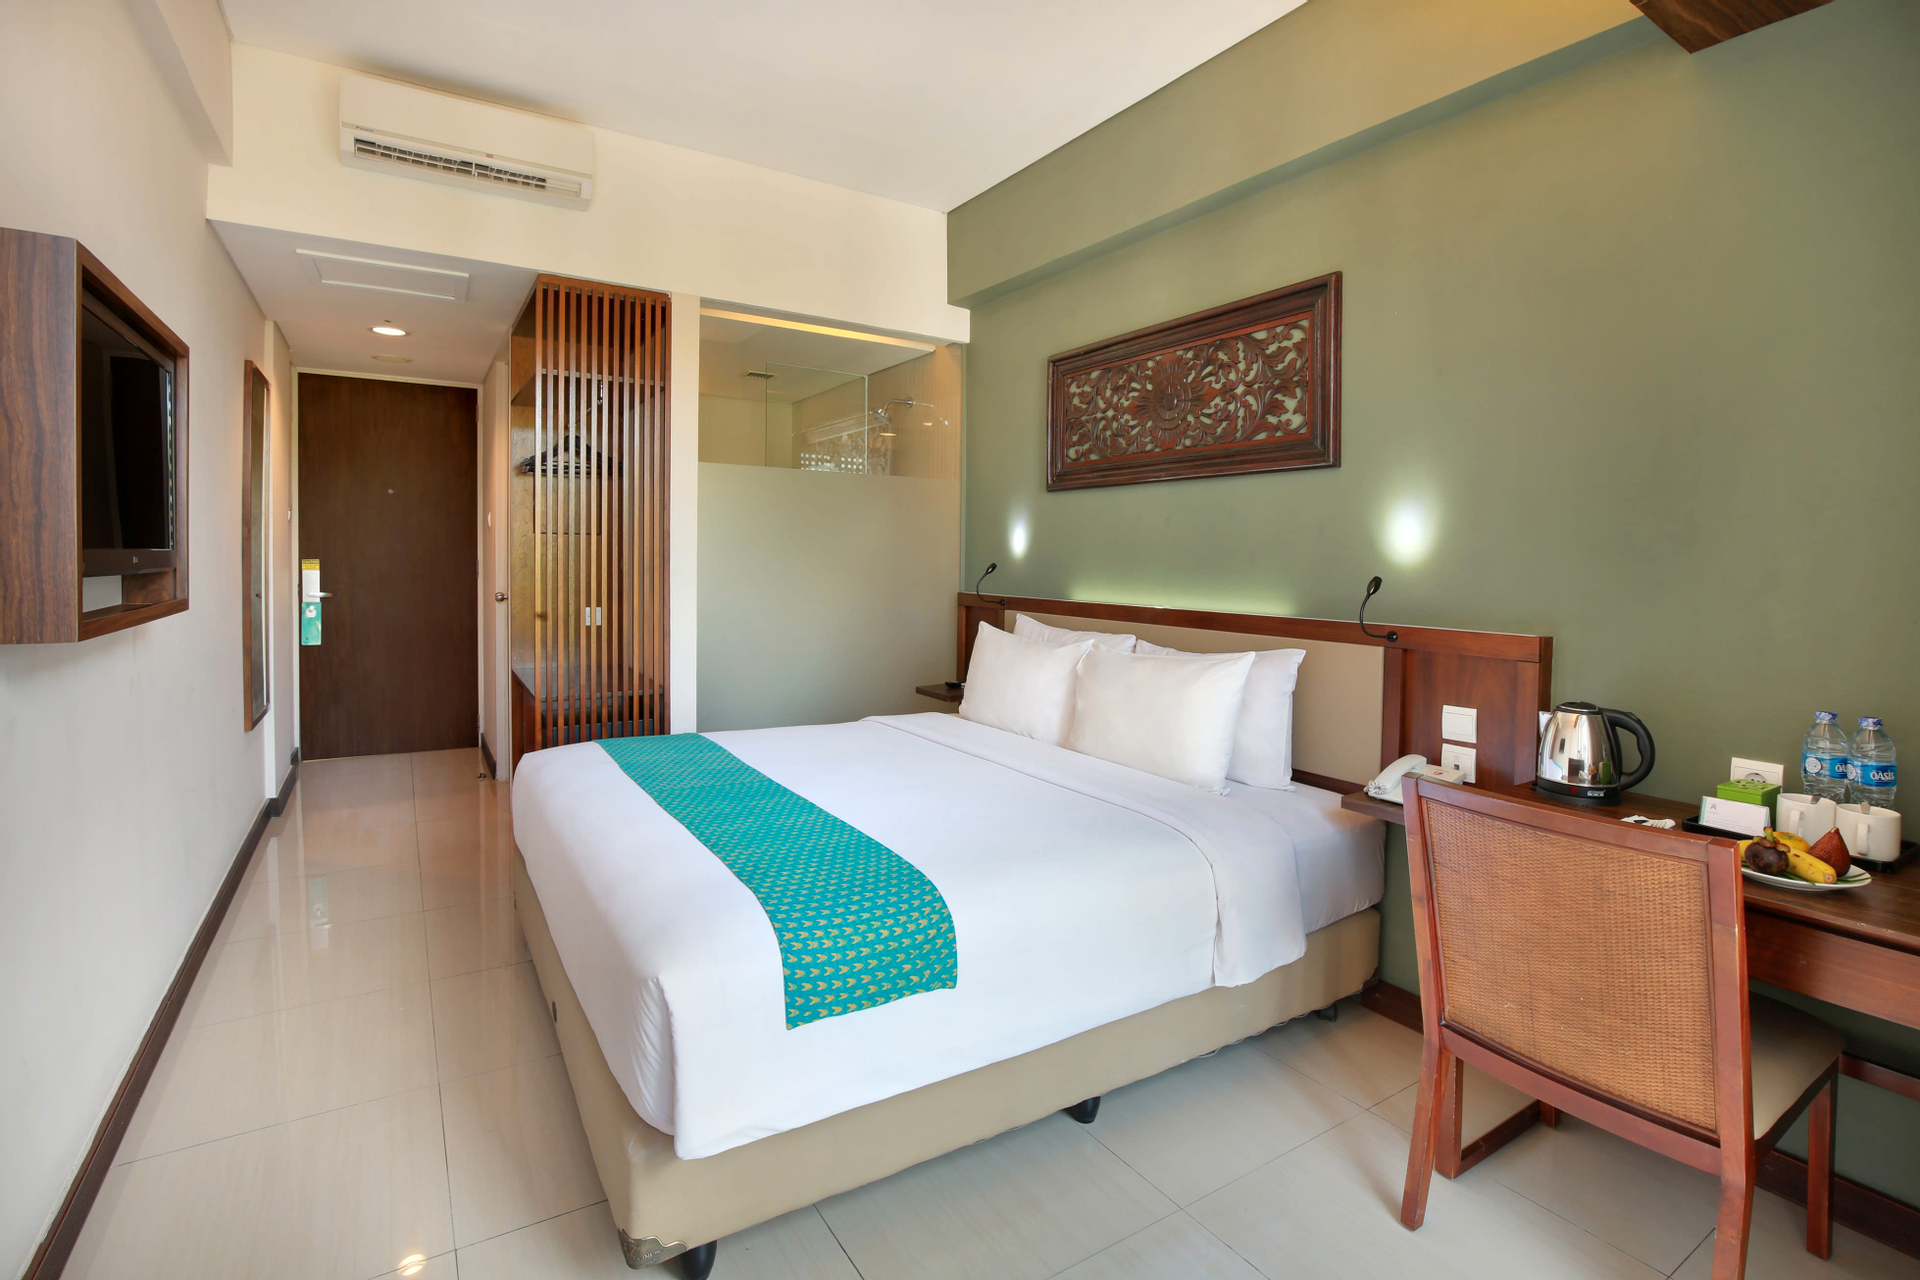 Bedroom 5, Hotel Terrace at Kuta, Badung